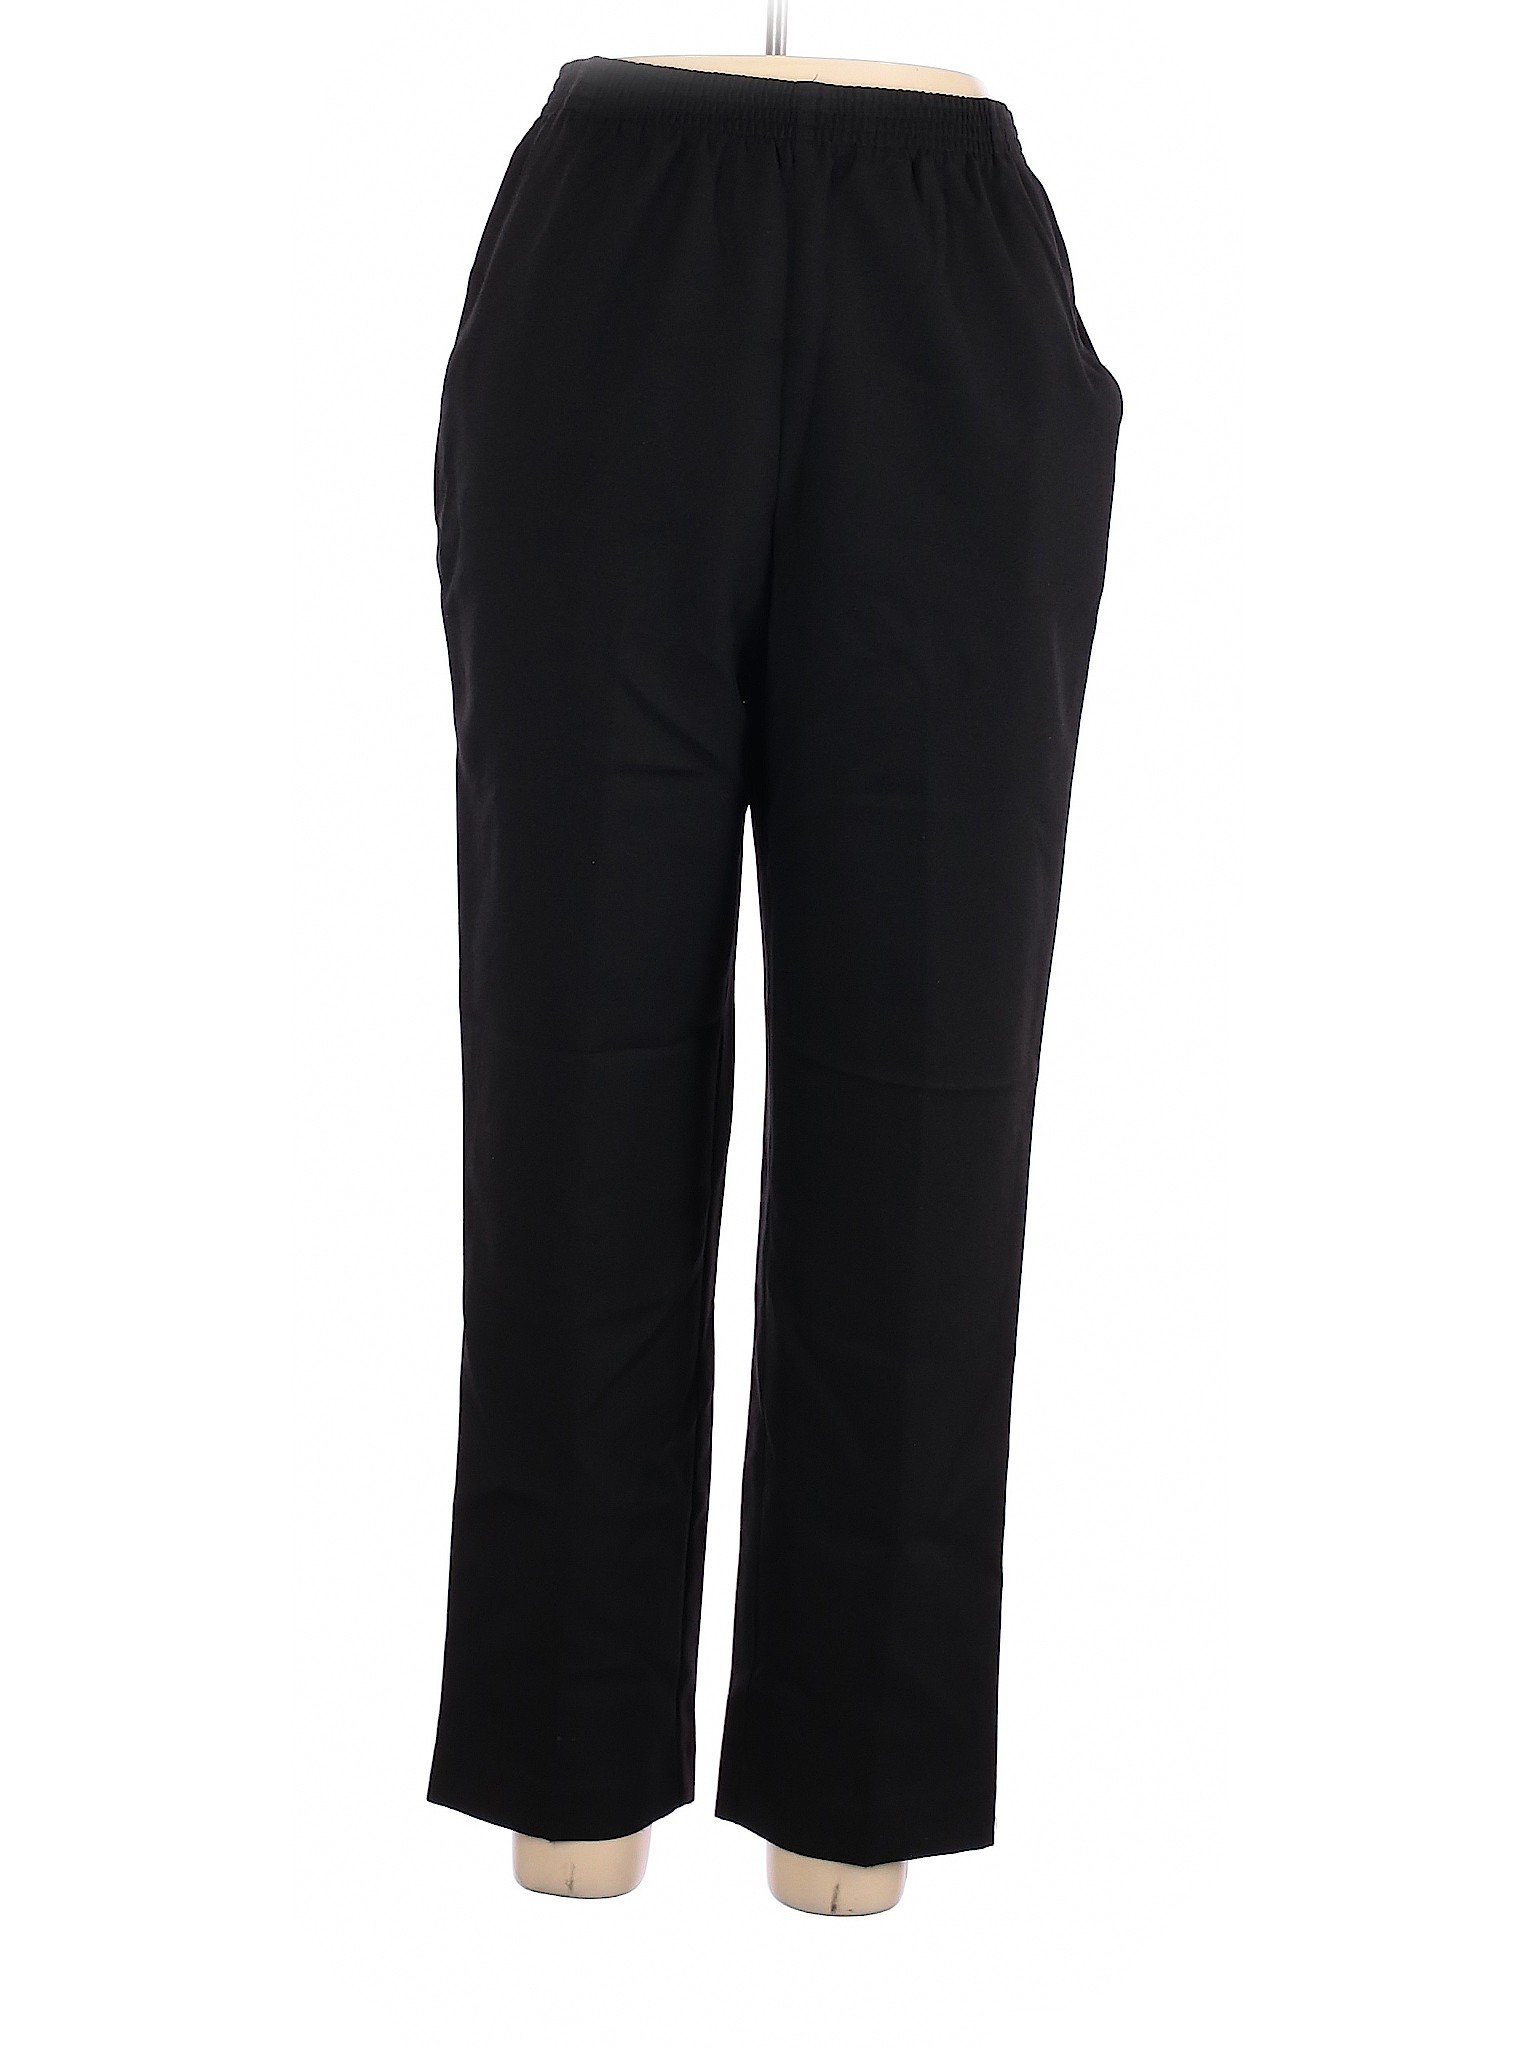 DonnKenny Classics Women Black Casual Pants 16 Petites | eBay